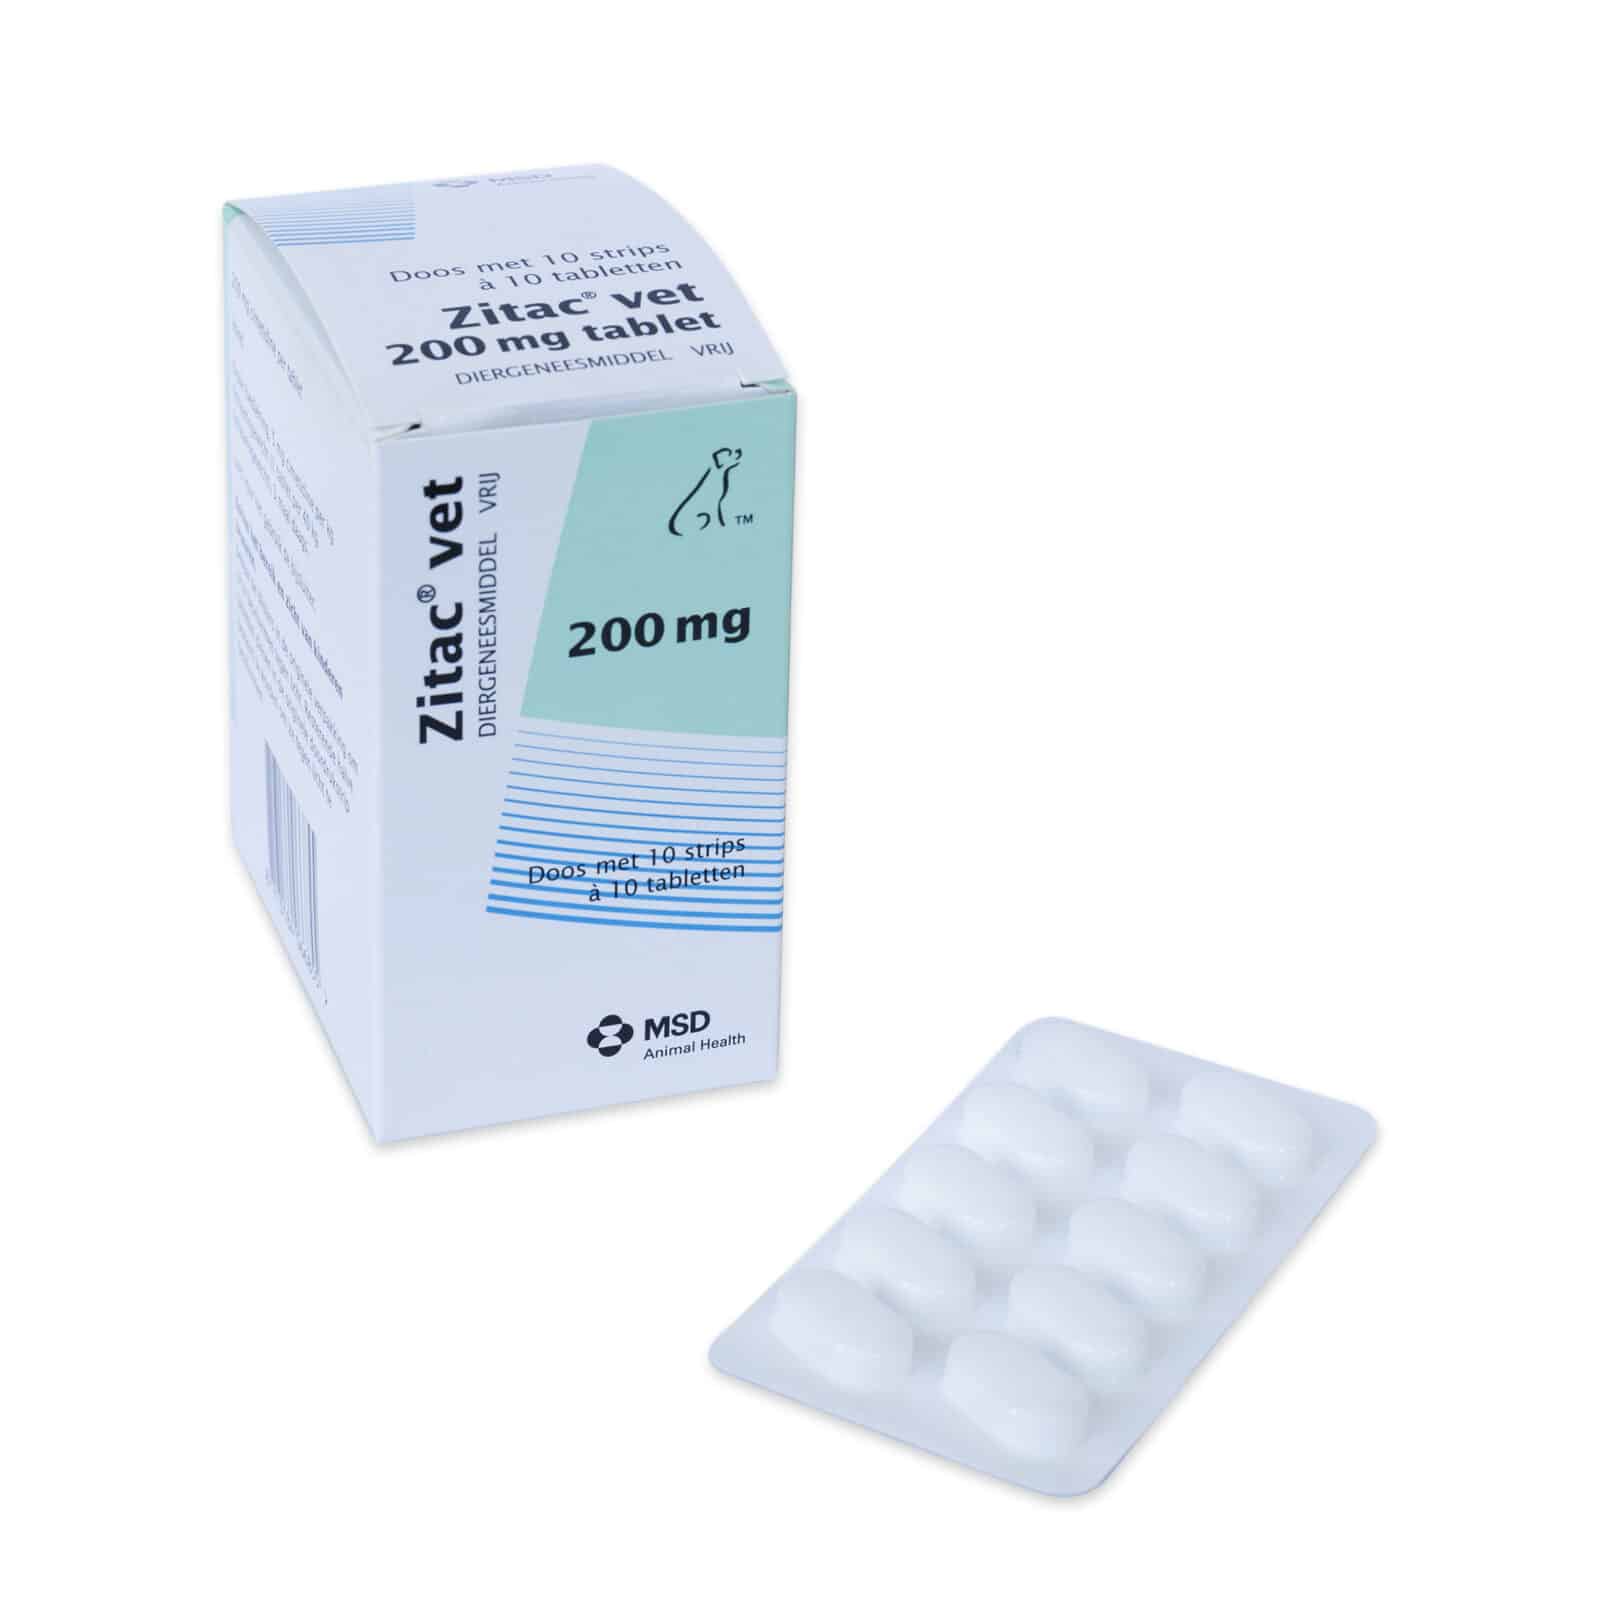 Zitac Vet 200 mg-1